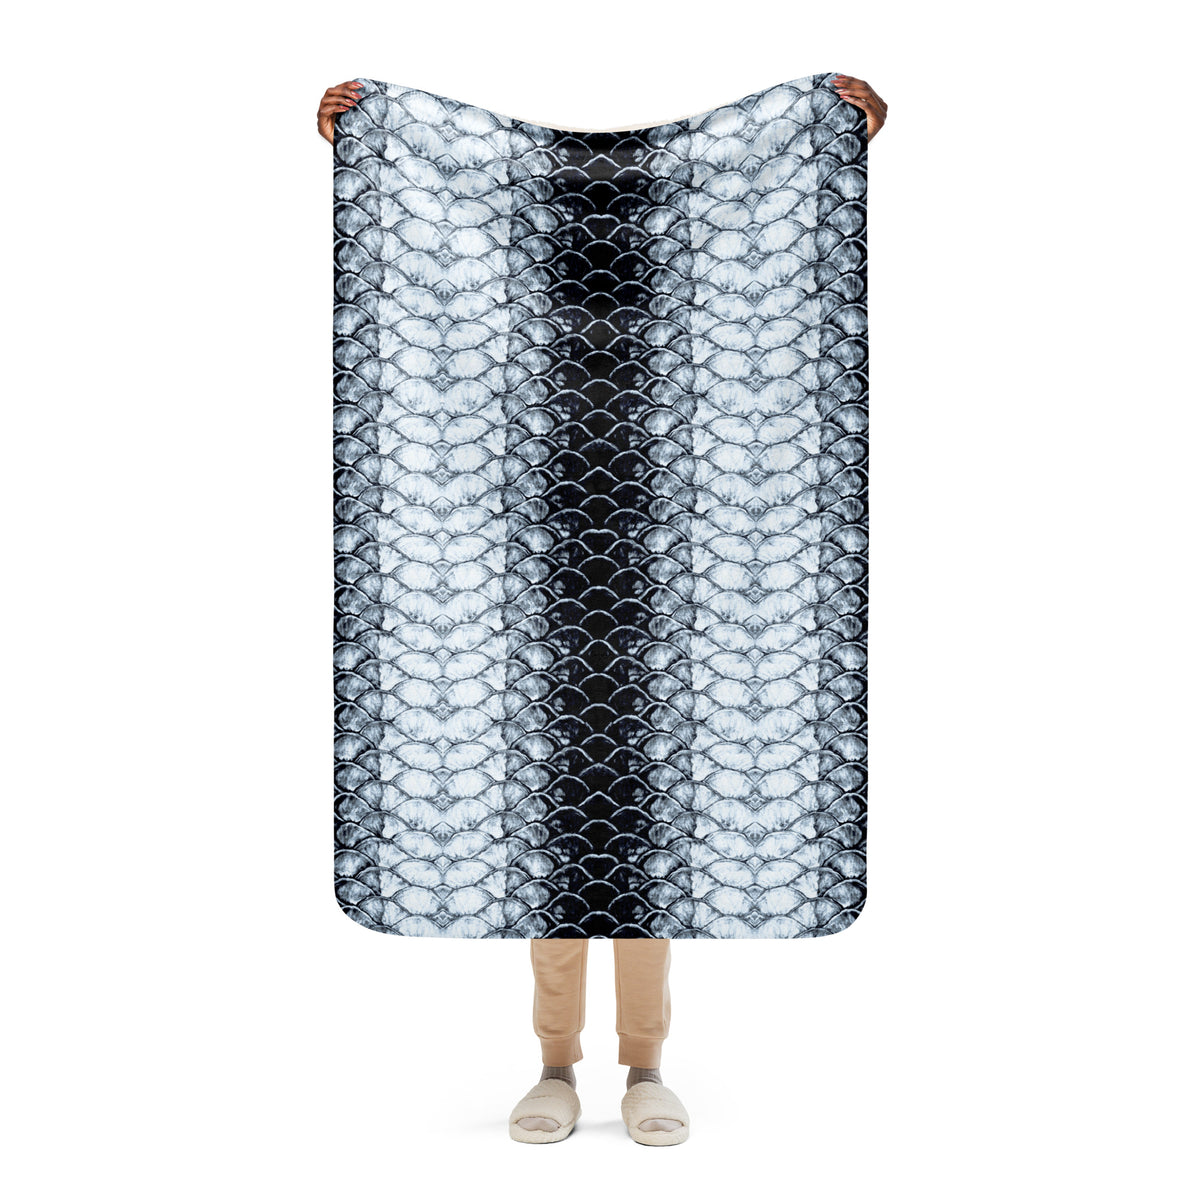 Tarpon Scales - Sherpa blanket [Multiple Sizes + FREE SHIPPING]